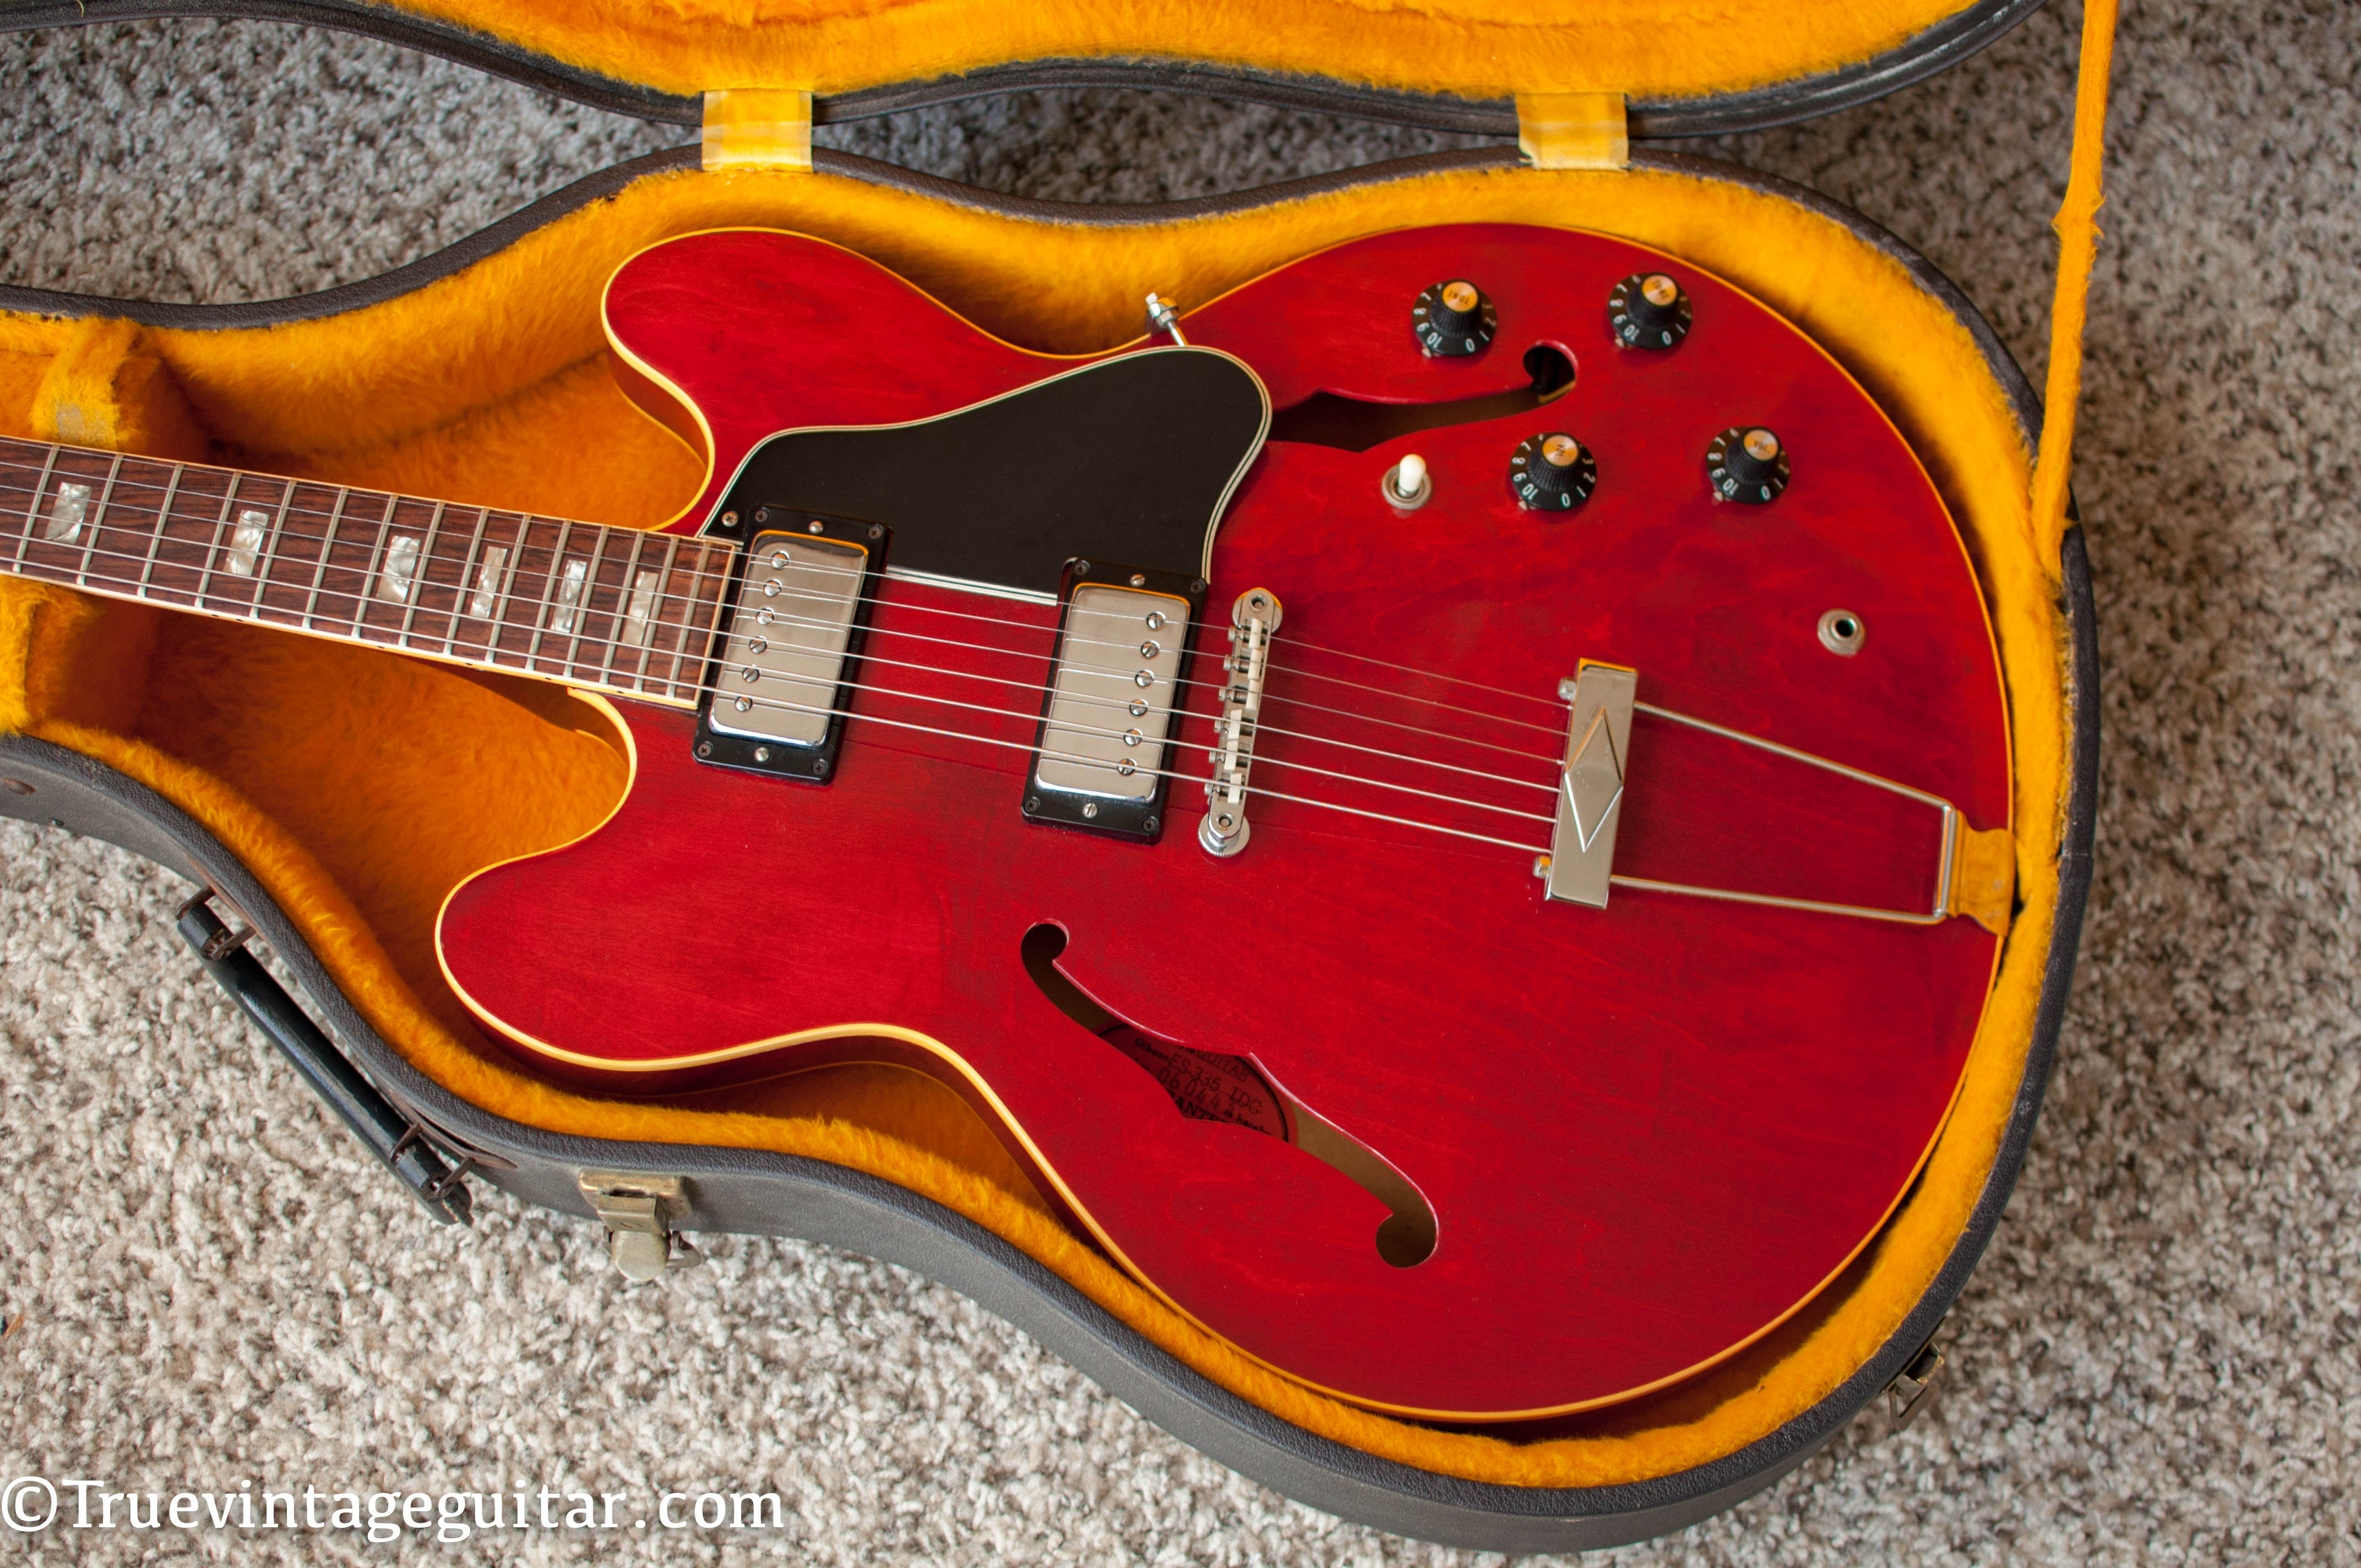 Vintage 1967 Gibson ES-335 Cherry red electric guitar in original case